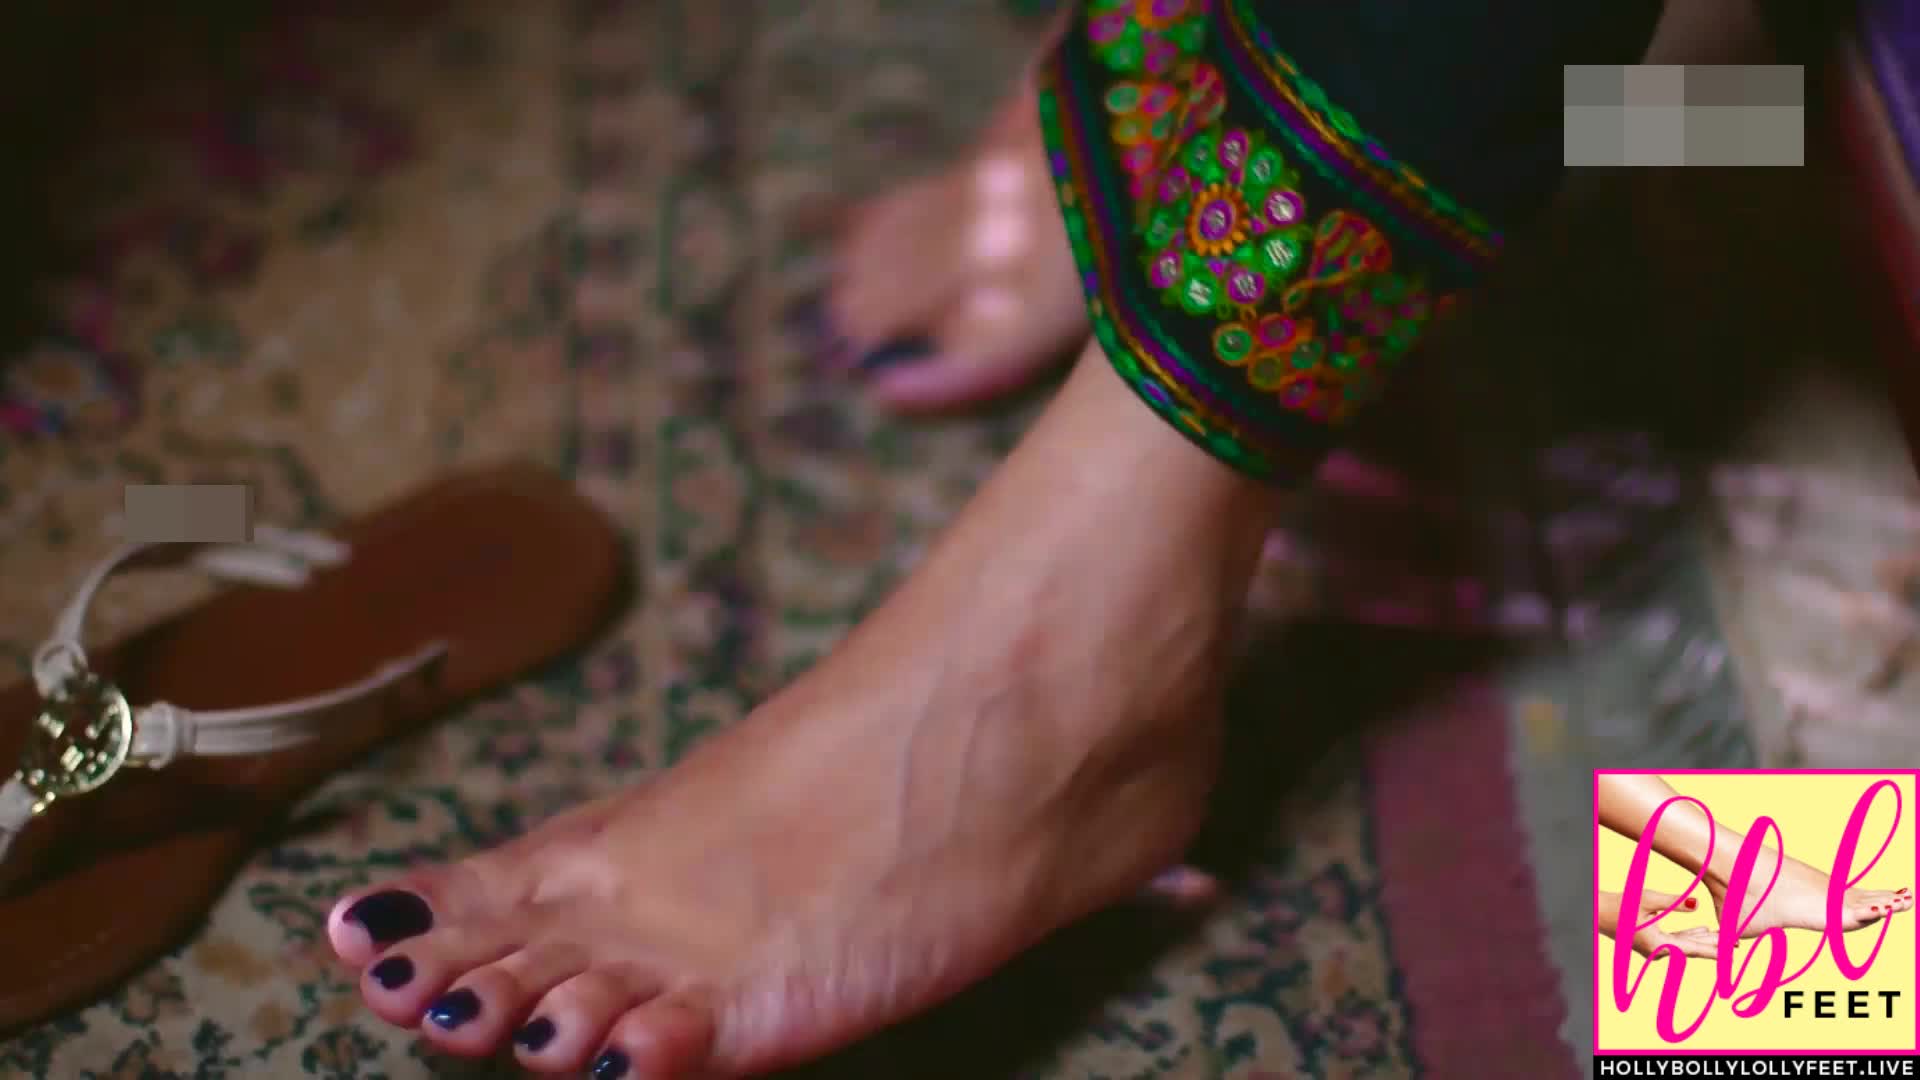 maria-wasti-feet-close-up-urdu1-dukh-sukh-ep-12-04